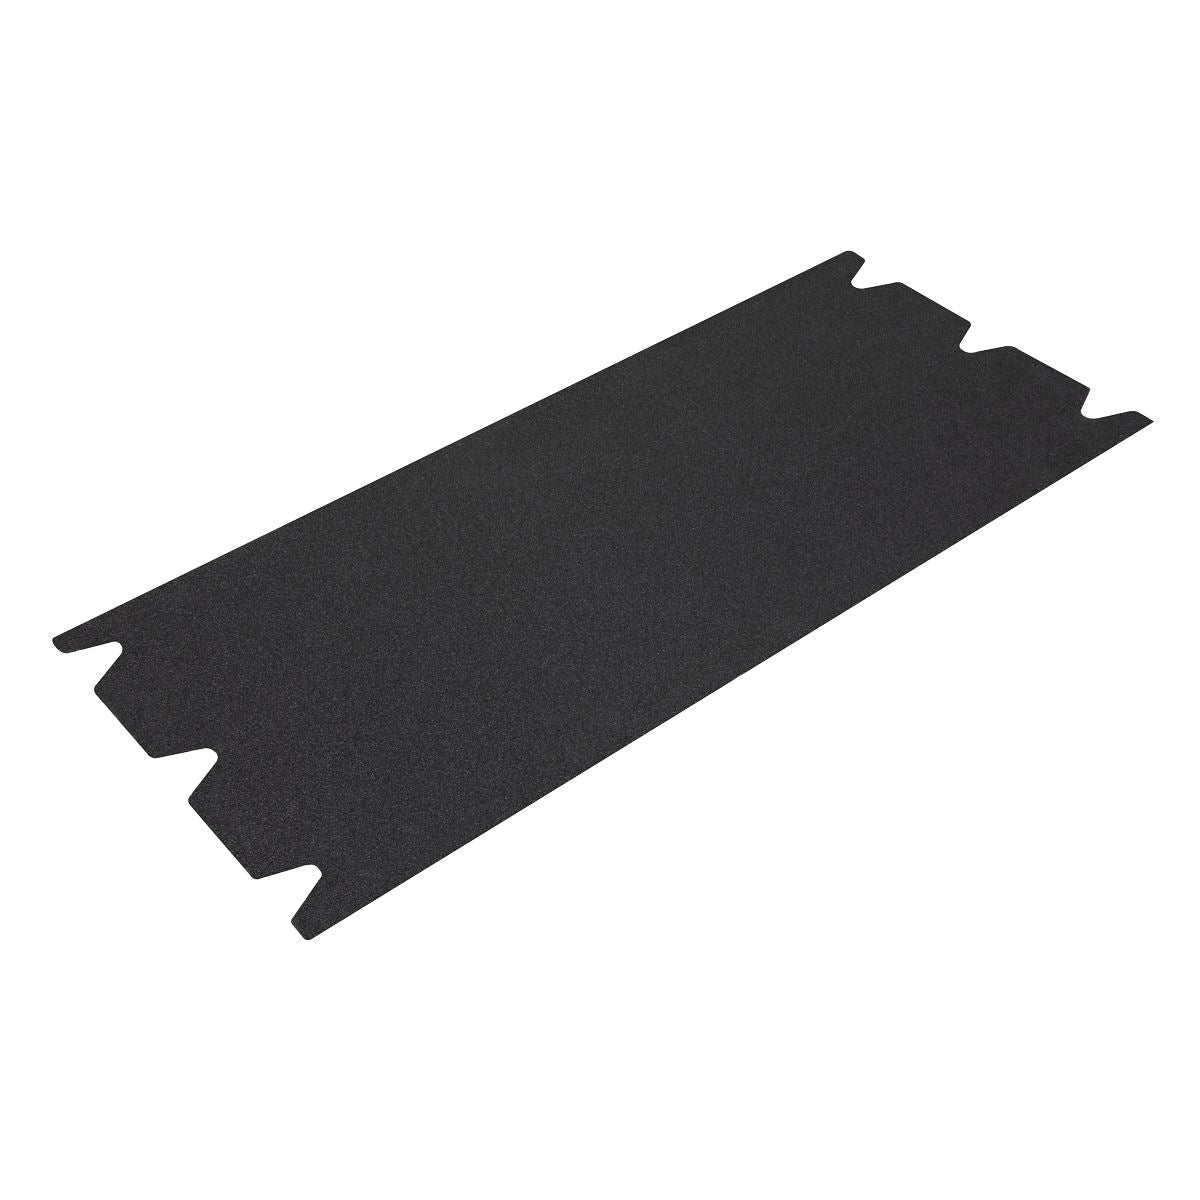 Sealey Floor Sanding Sheet 205 x 470mm 120Grit - Pack of 25